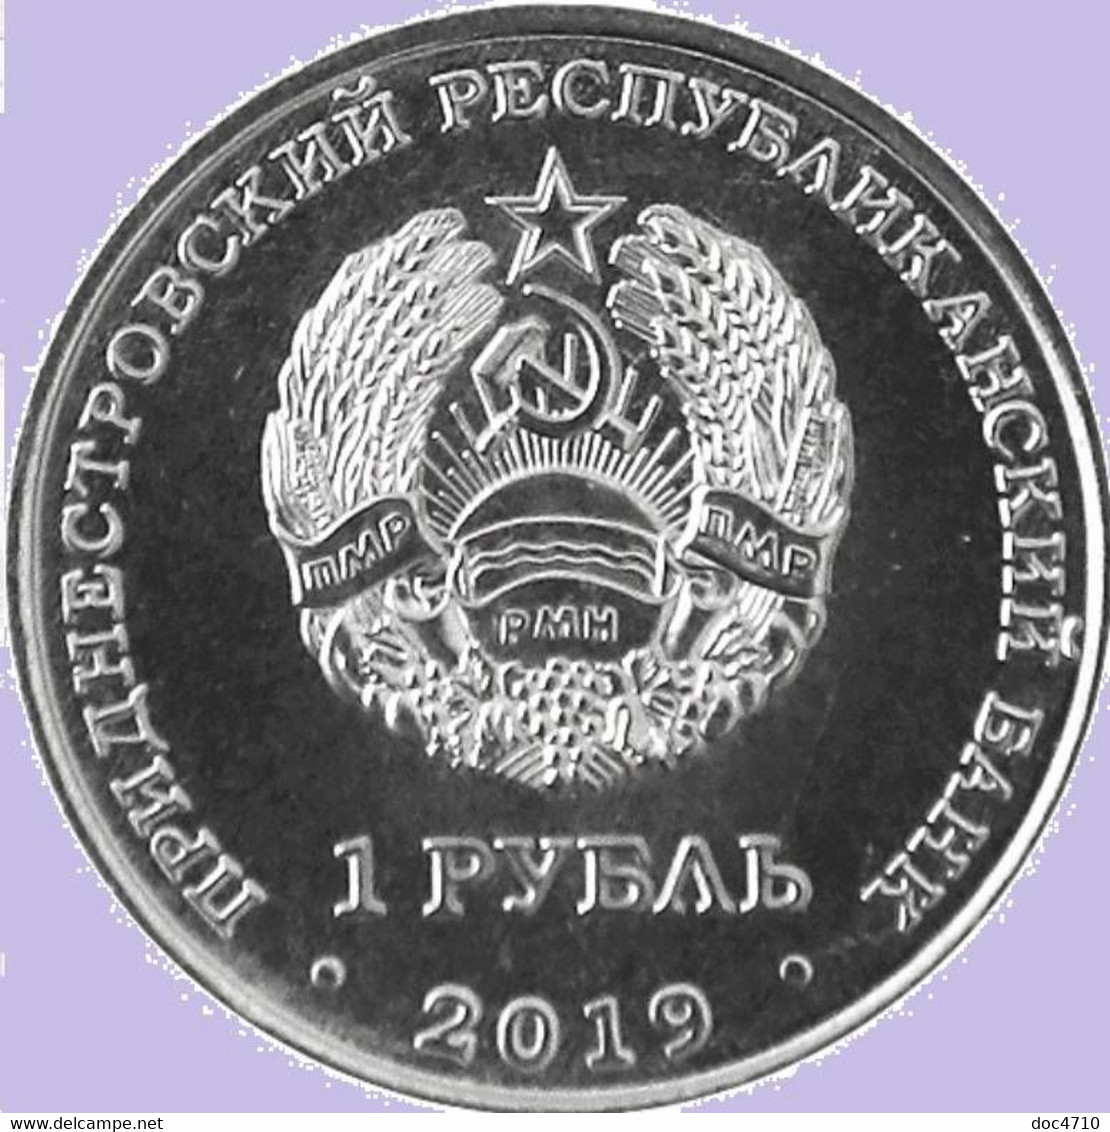 Moldova-Transnistria 1 Ruble 2019, Martagon Lily - Lily "Royal Curls" Plant, KM#New, Unc - Moldova